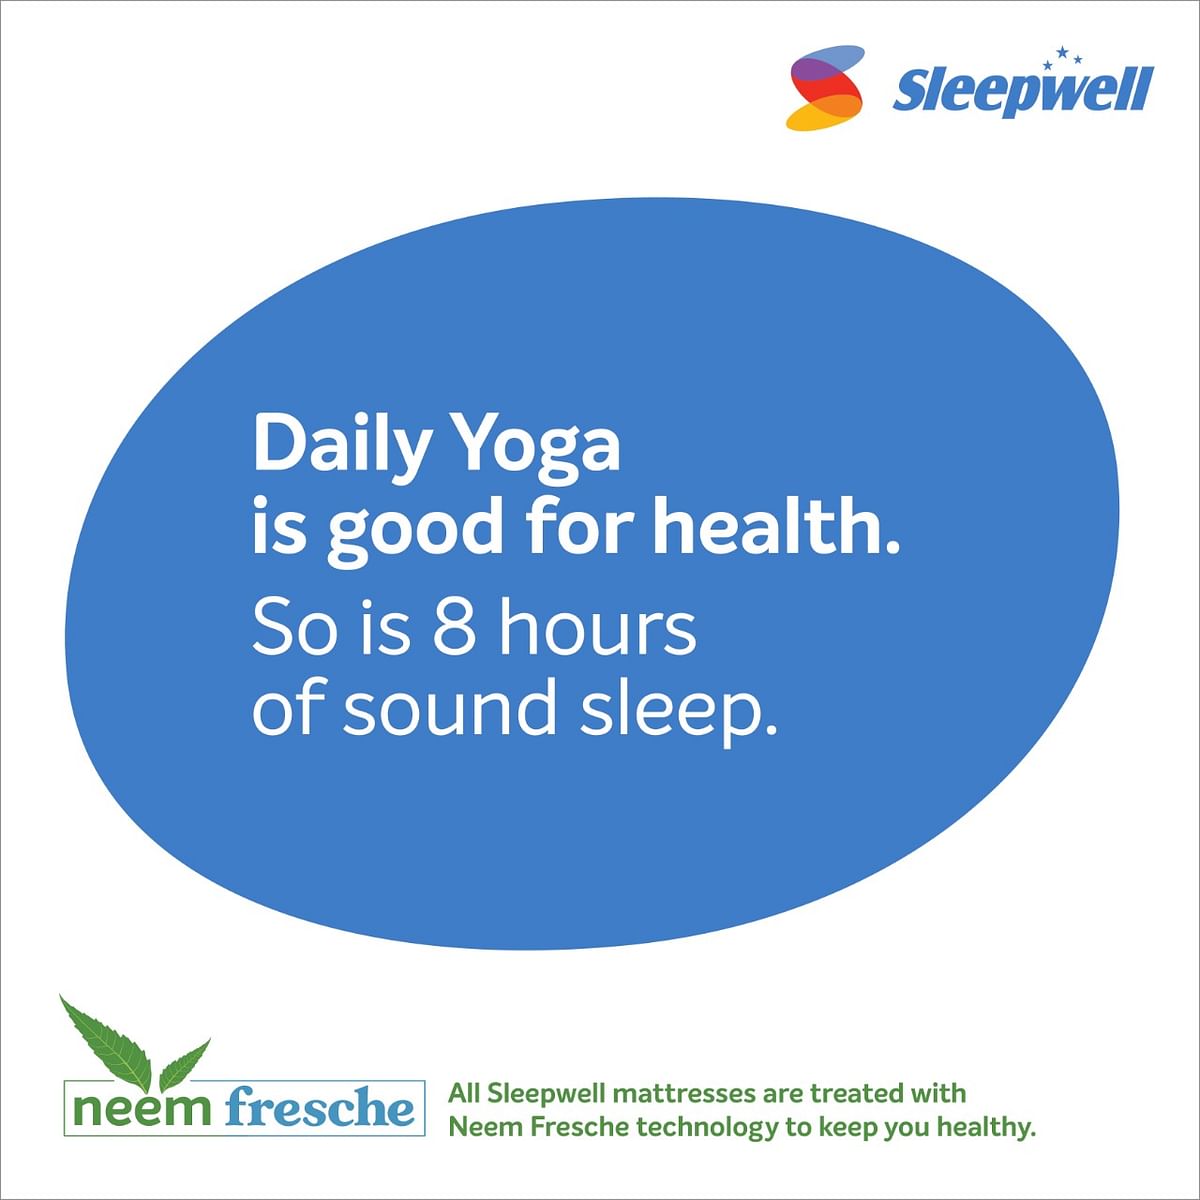 Sleepwell reiterates the importance of sleep 